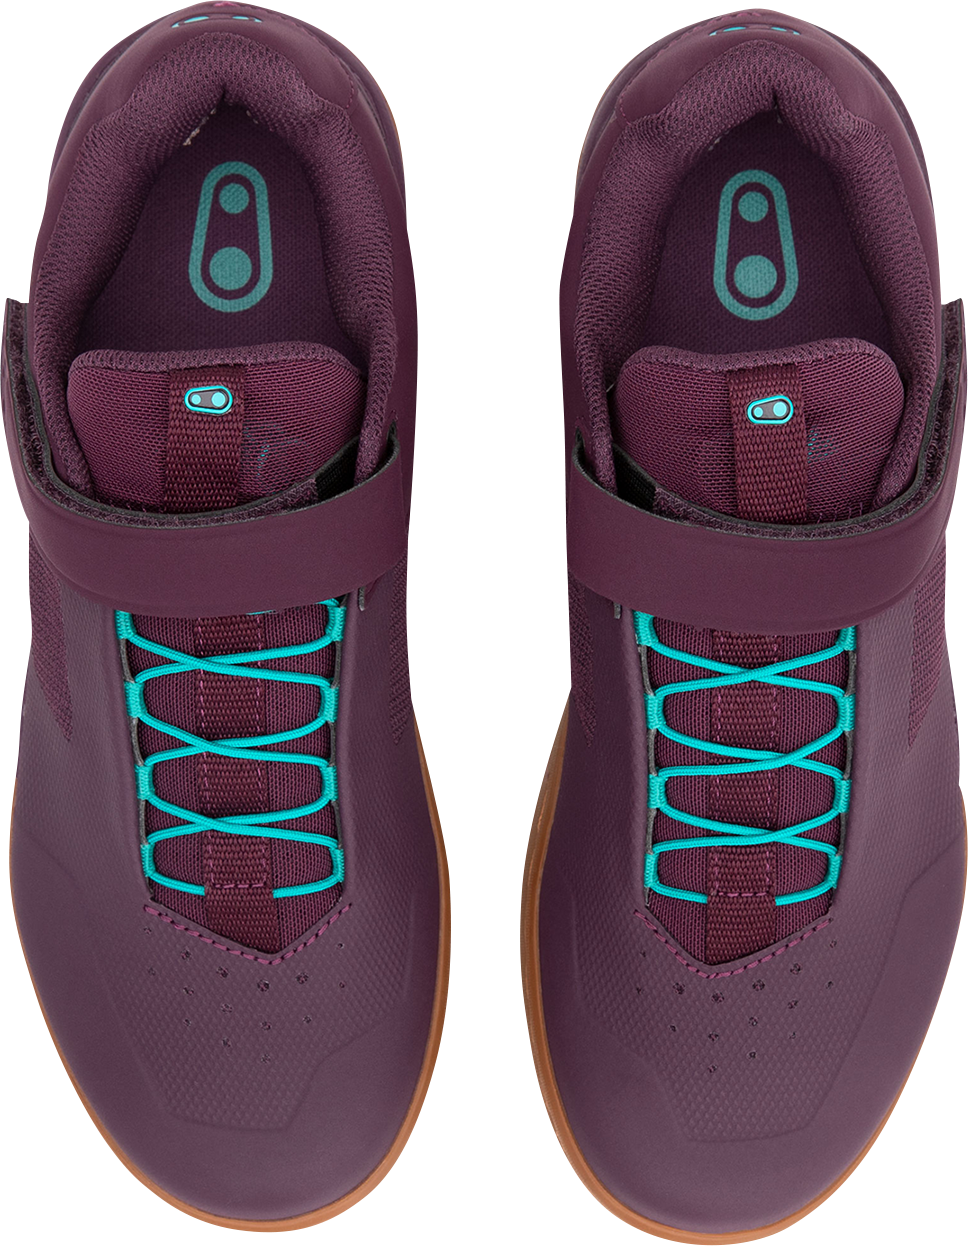 Stamp Speedlace Shoes - Purple/Teal Blue - US 11.5